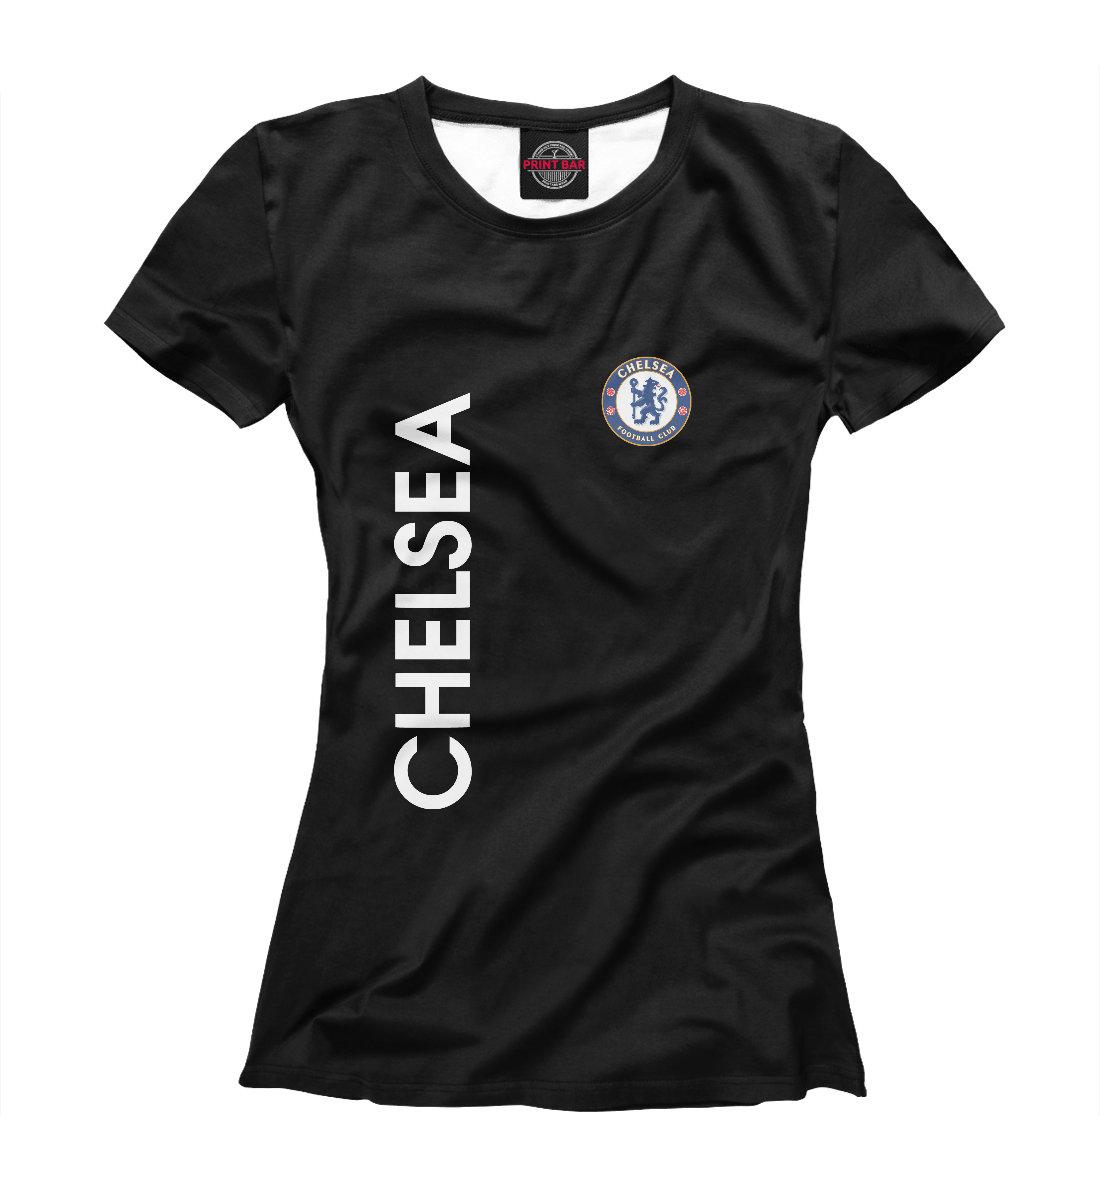 Детская Футболка Chelsea для девочек, артикул CHL-345279-fut-1mp